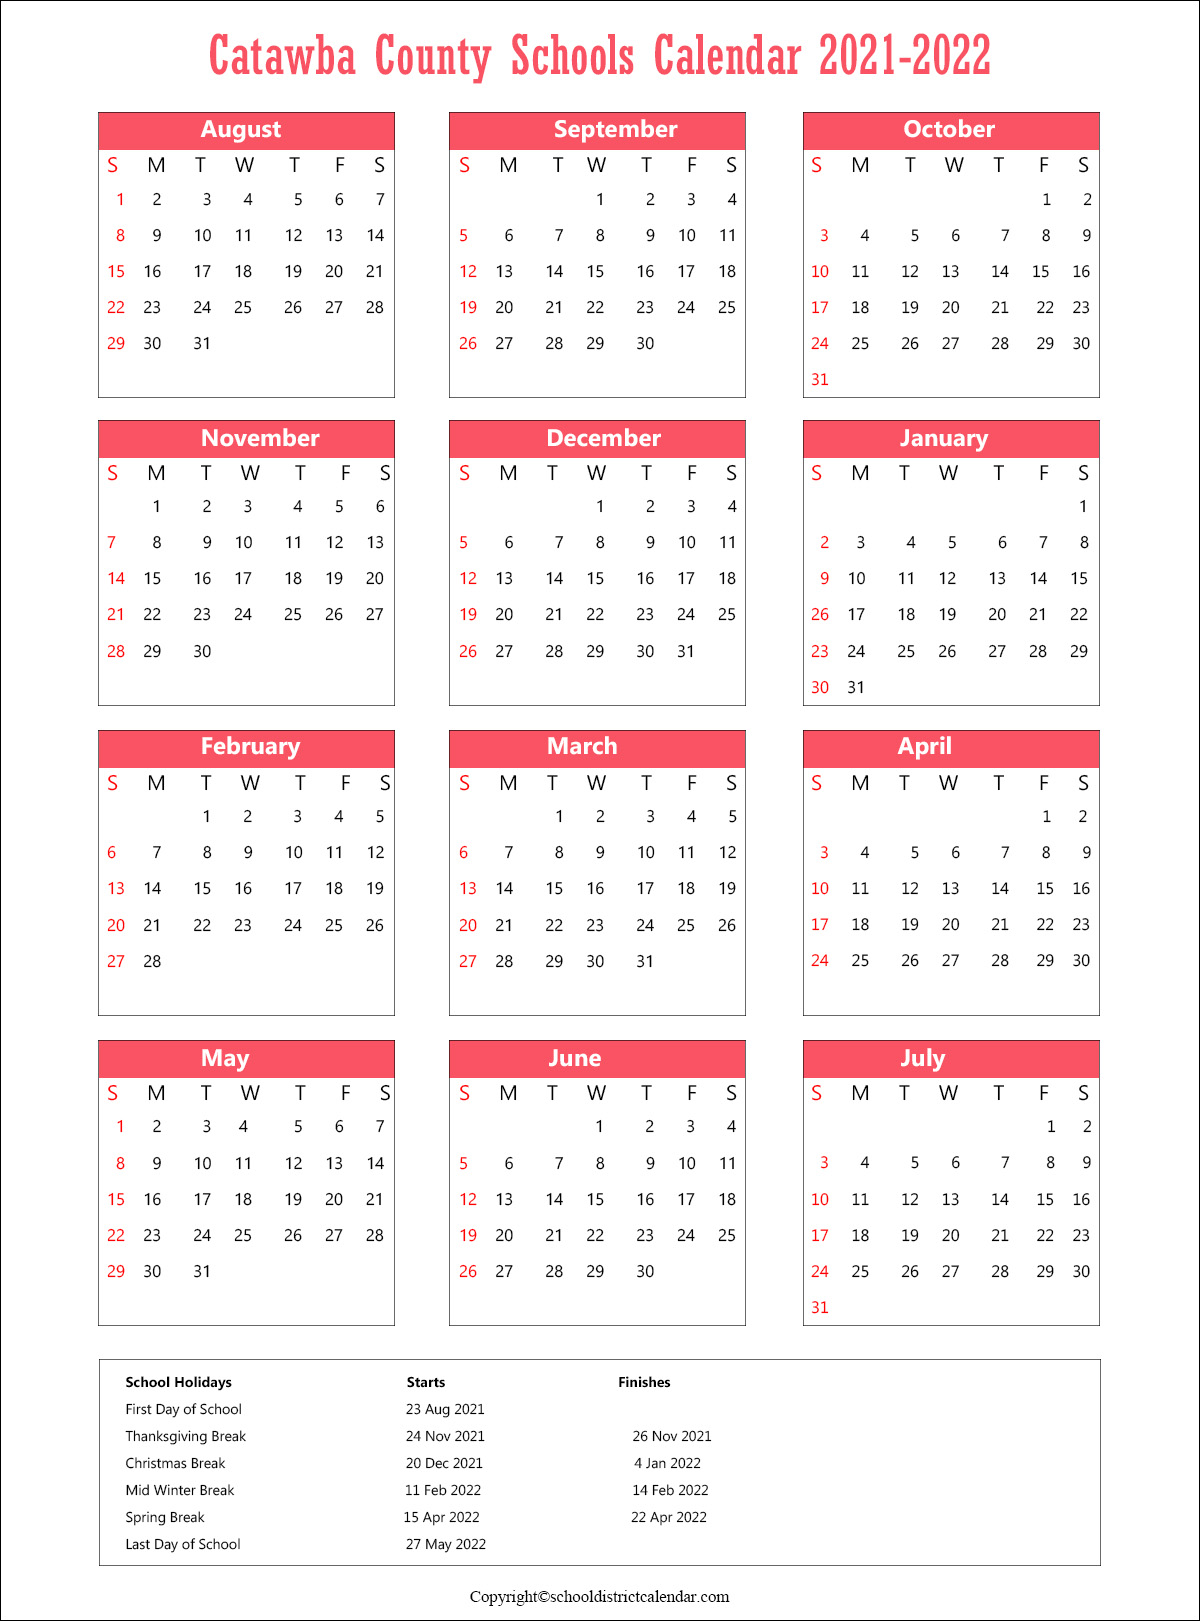 Catawba County Schools District, Newton Calendar Holidays 2021